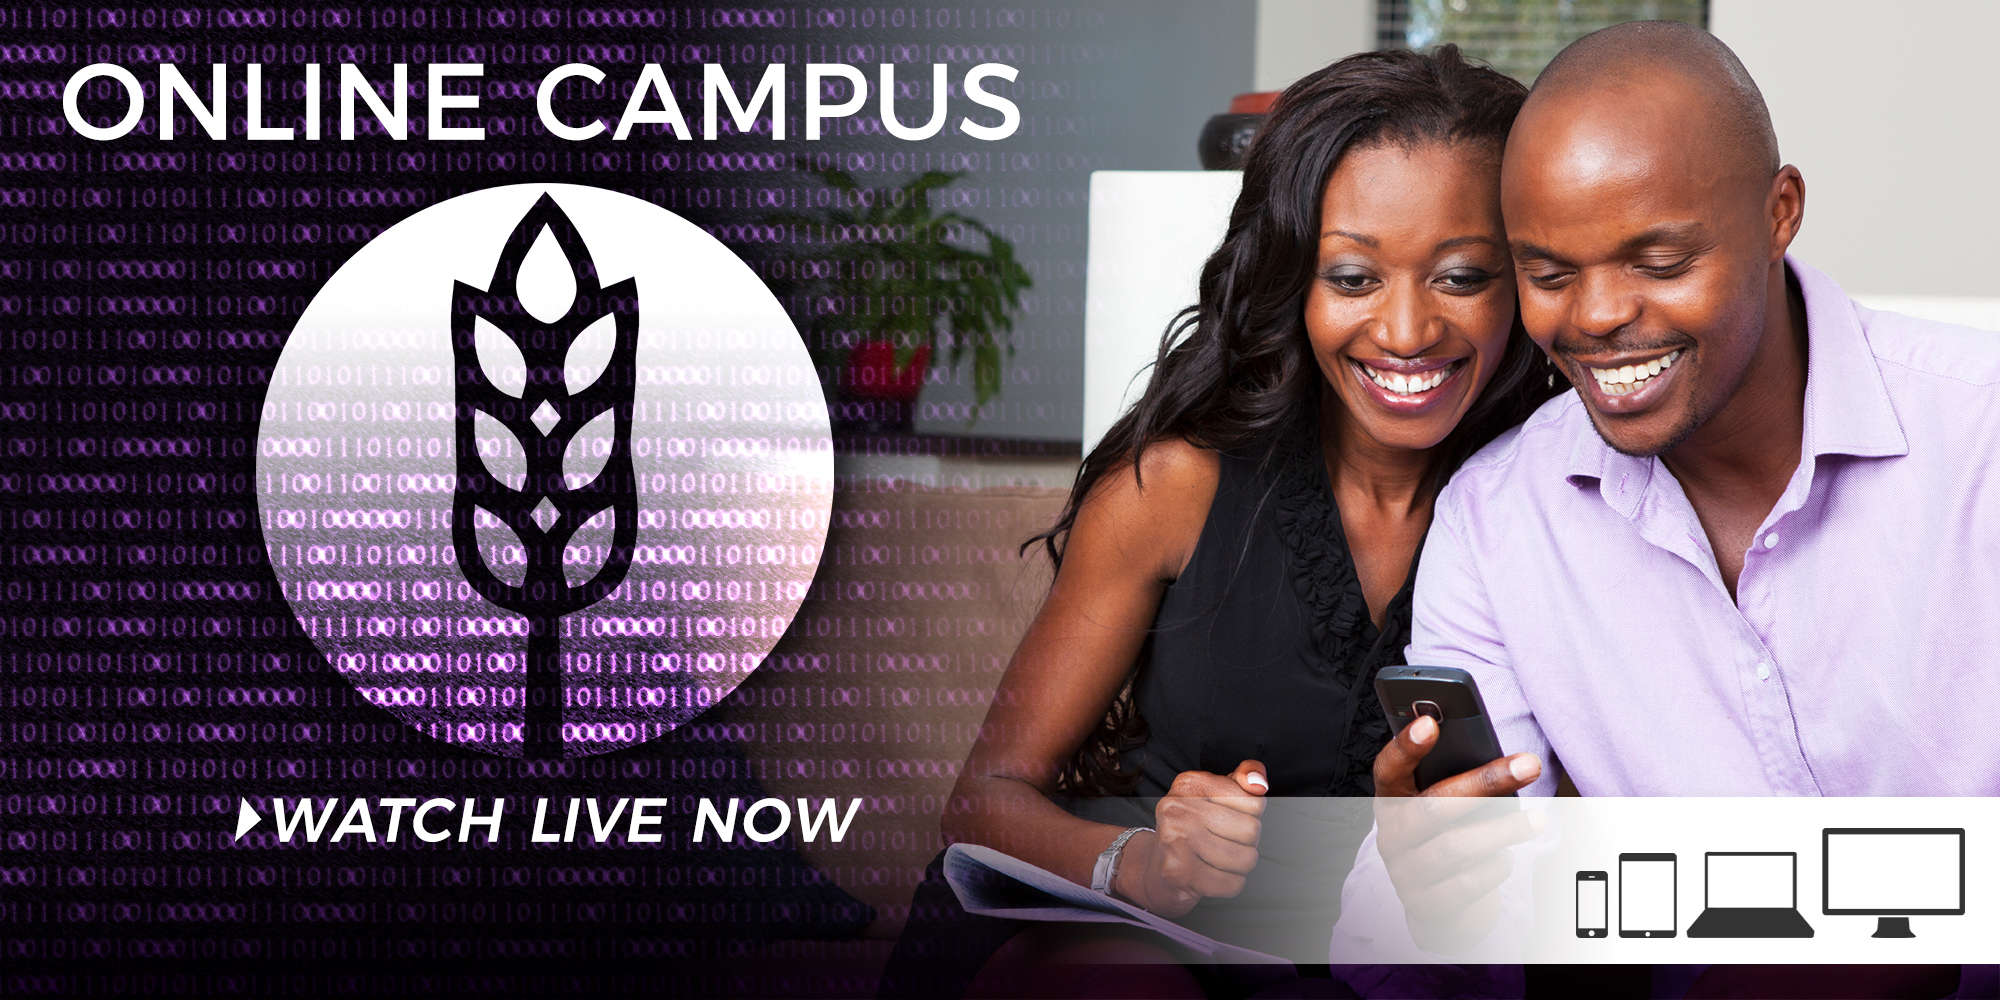 Online Campus Watch Live Now